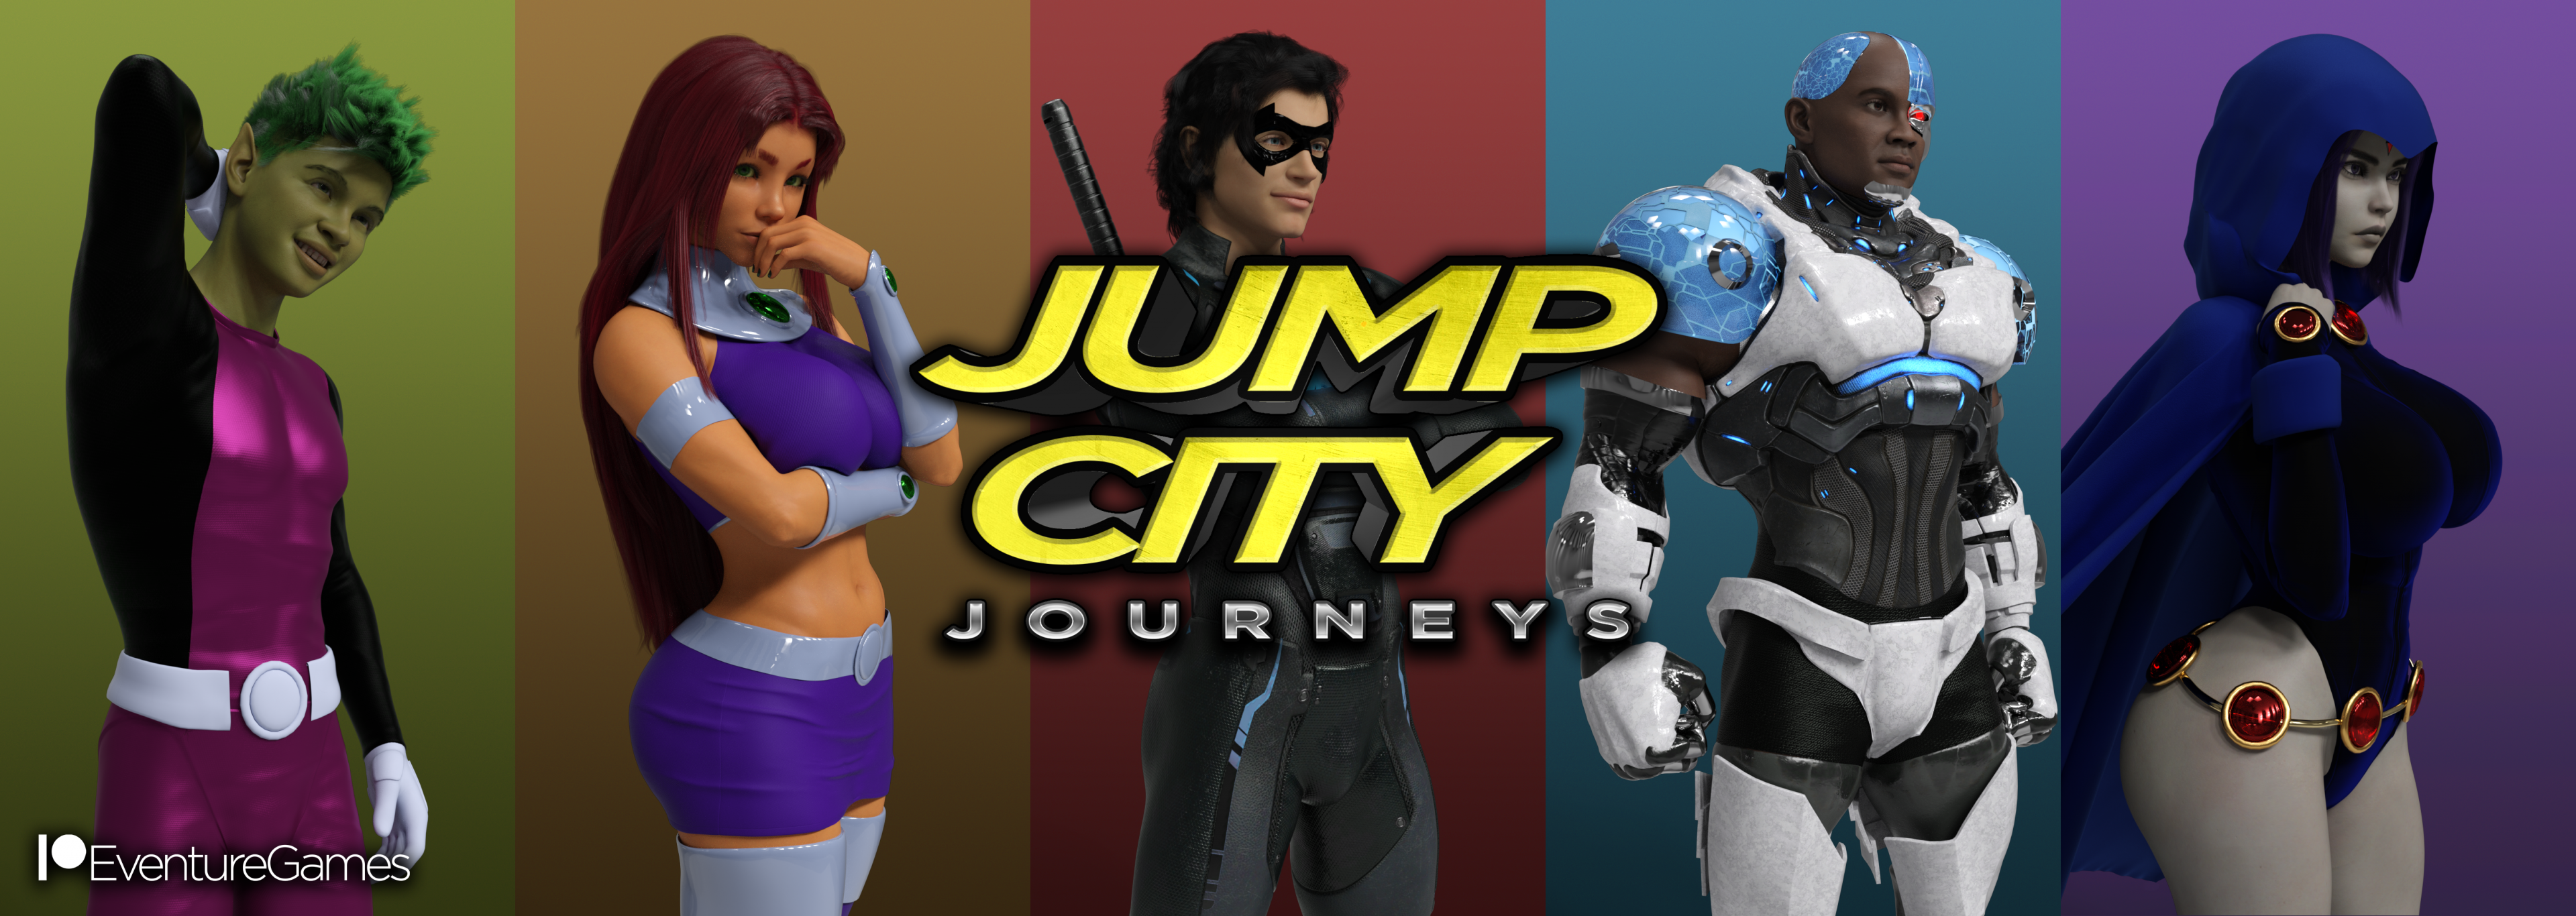 Jump City Journeys poster